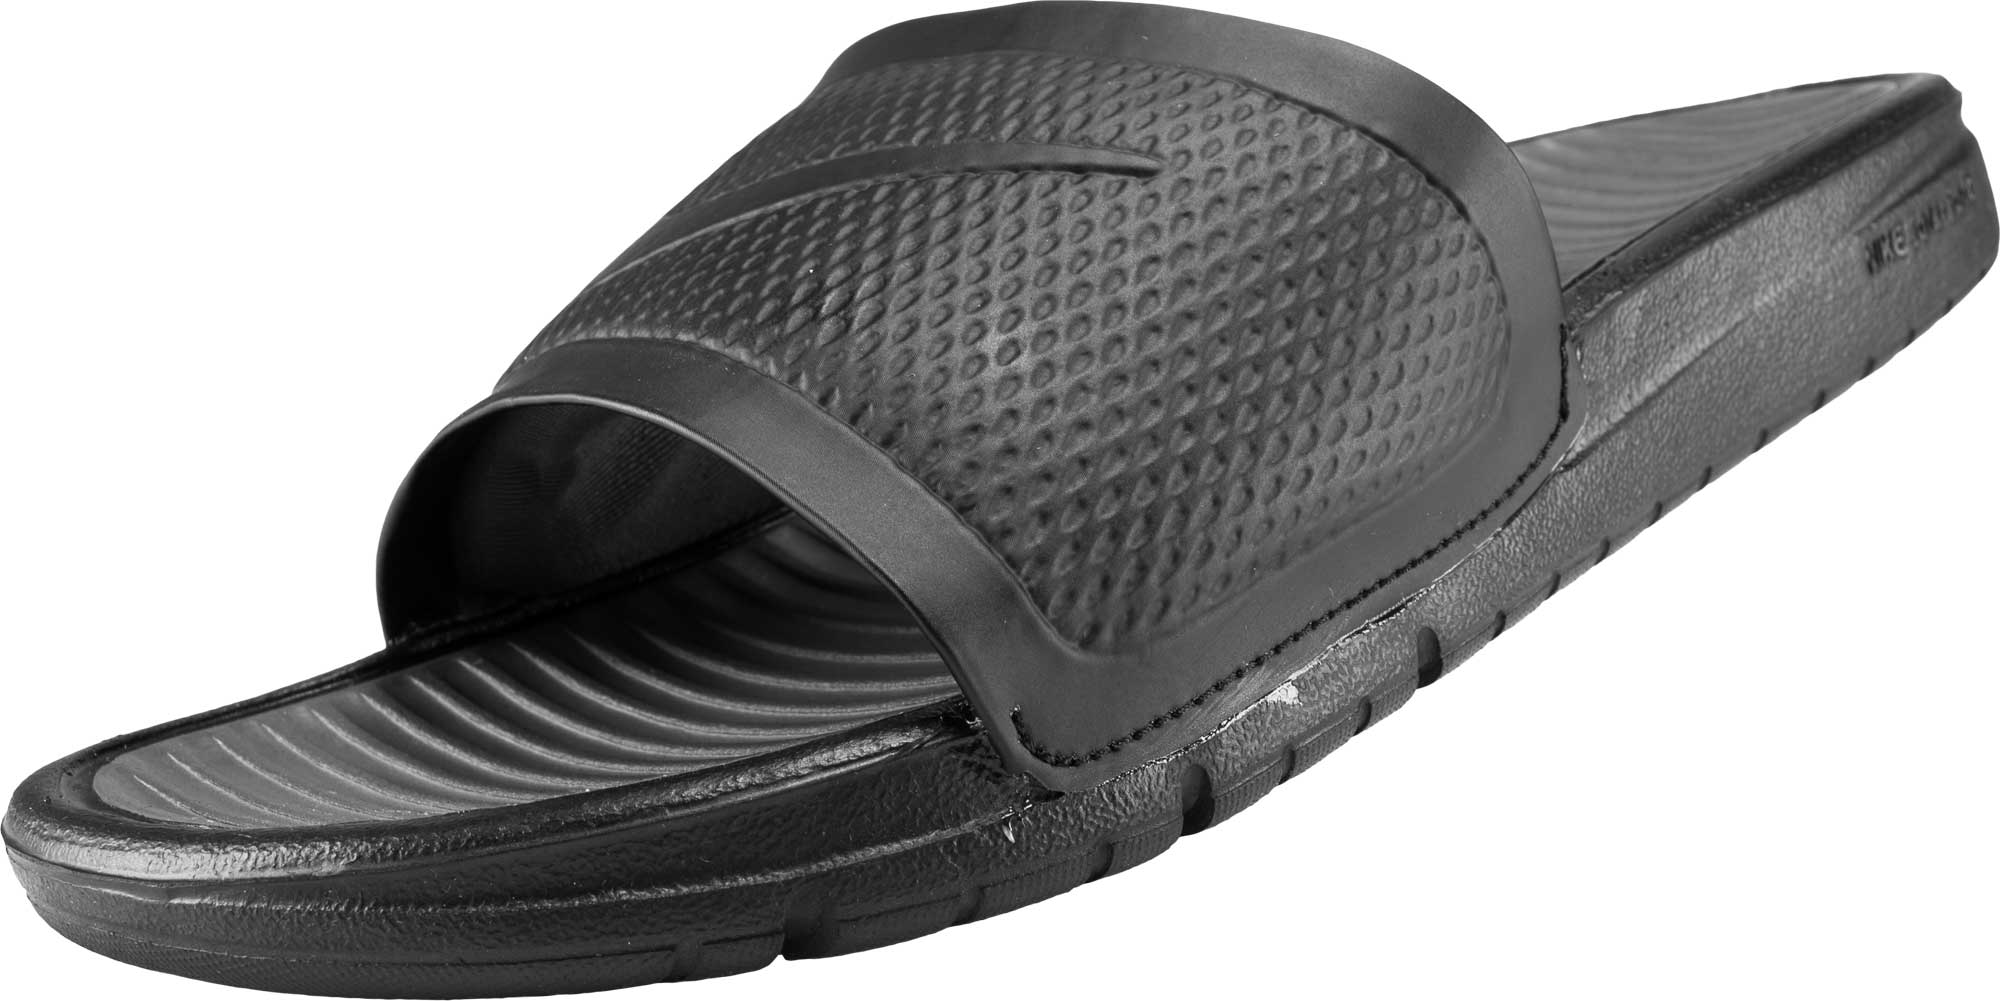 soccer slide sandals